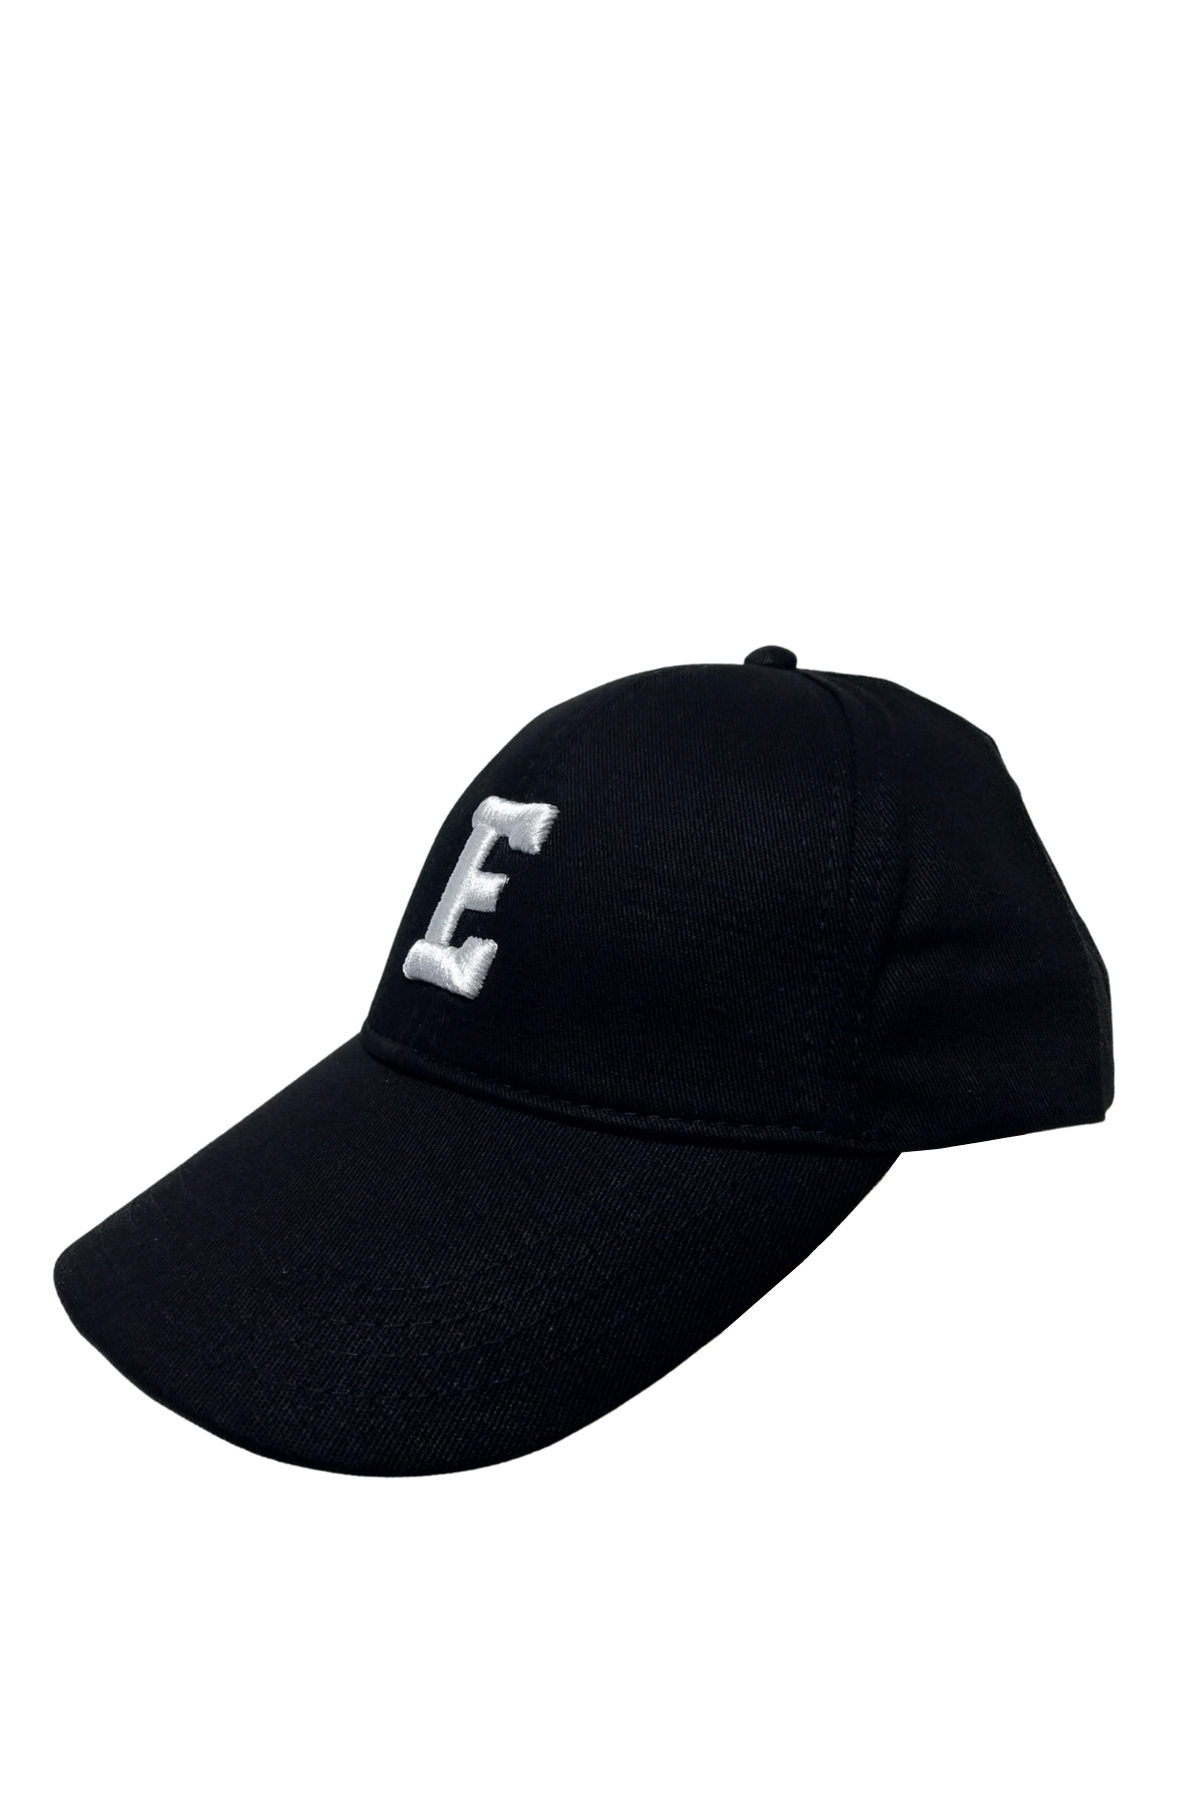 Syt 220 - E Harfli Siyah Şapka